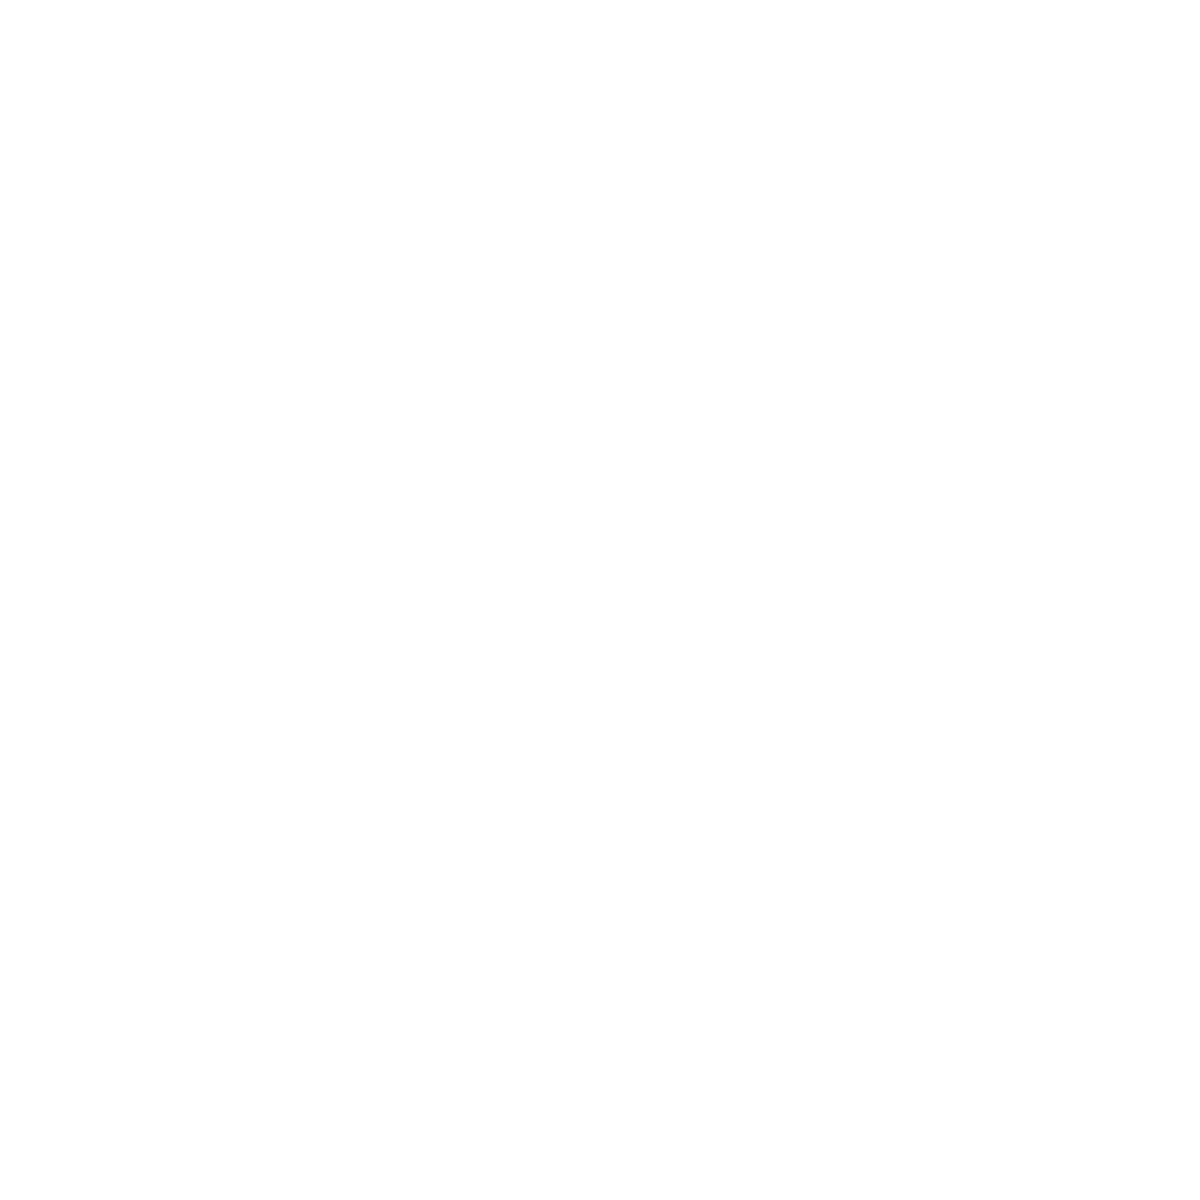 Toon Boom